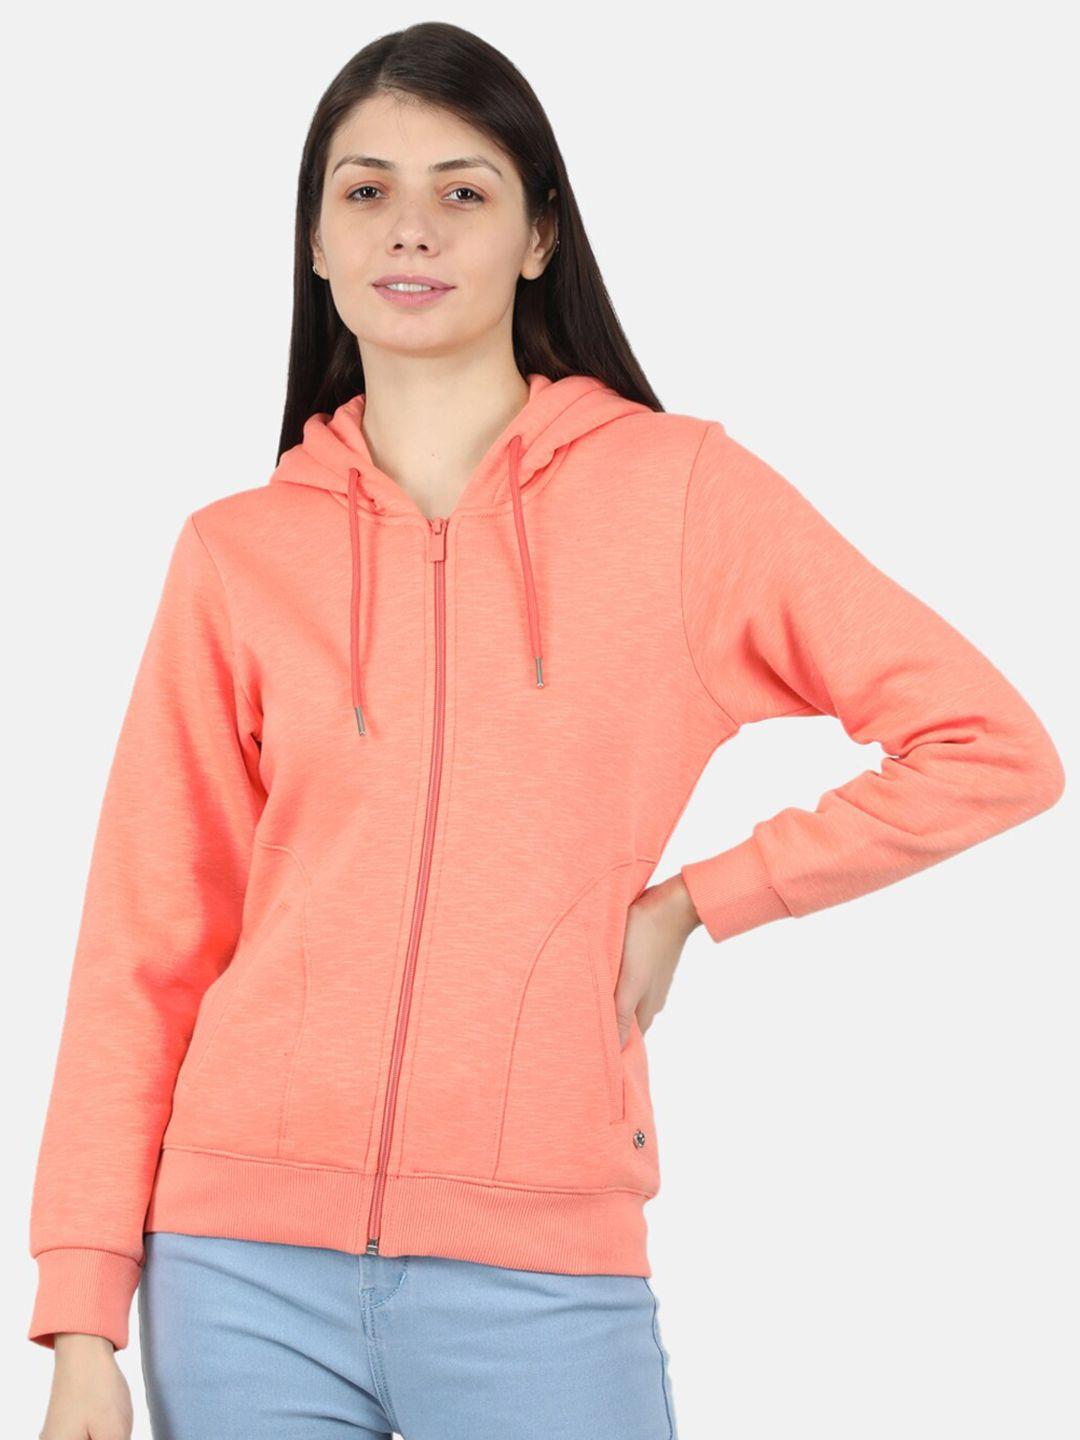 monte carlo women peach-coloured hooded sweatshirt